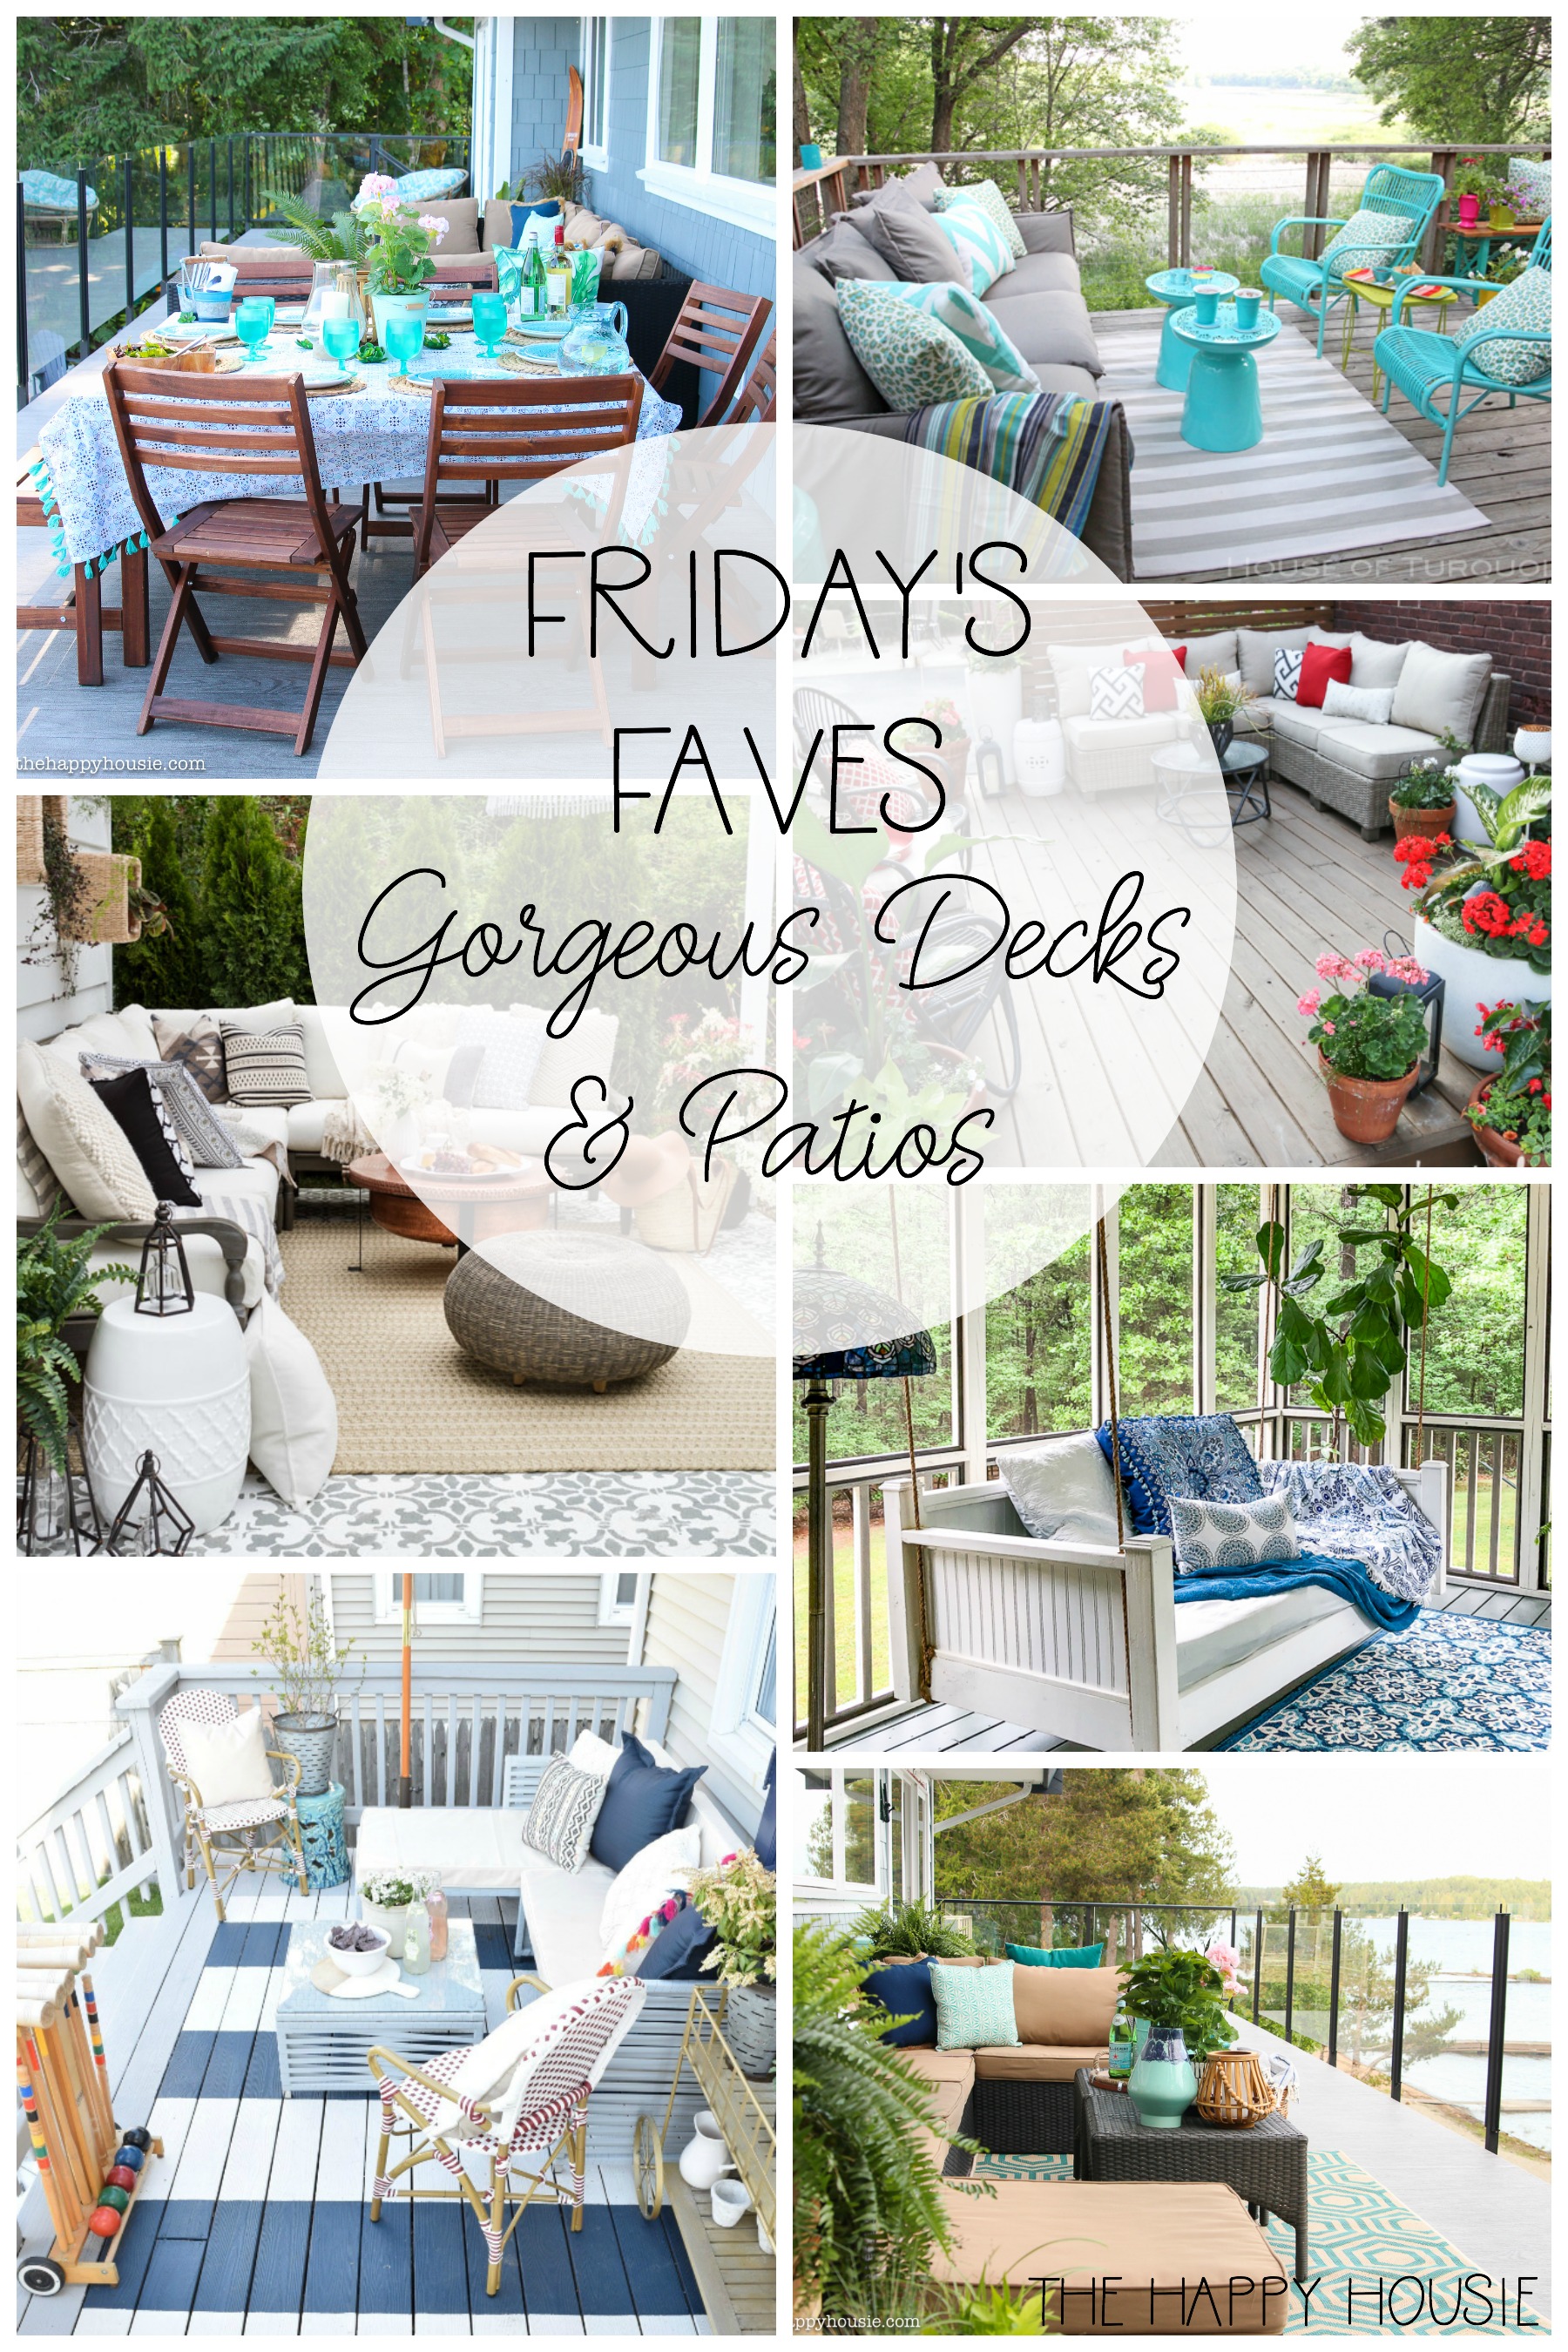 Fridays Faves Gorgeous Decks & Patios poster.